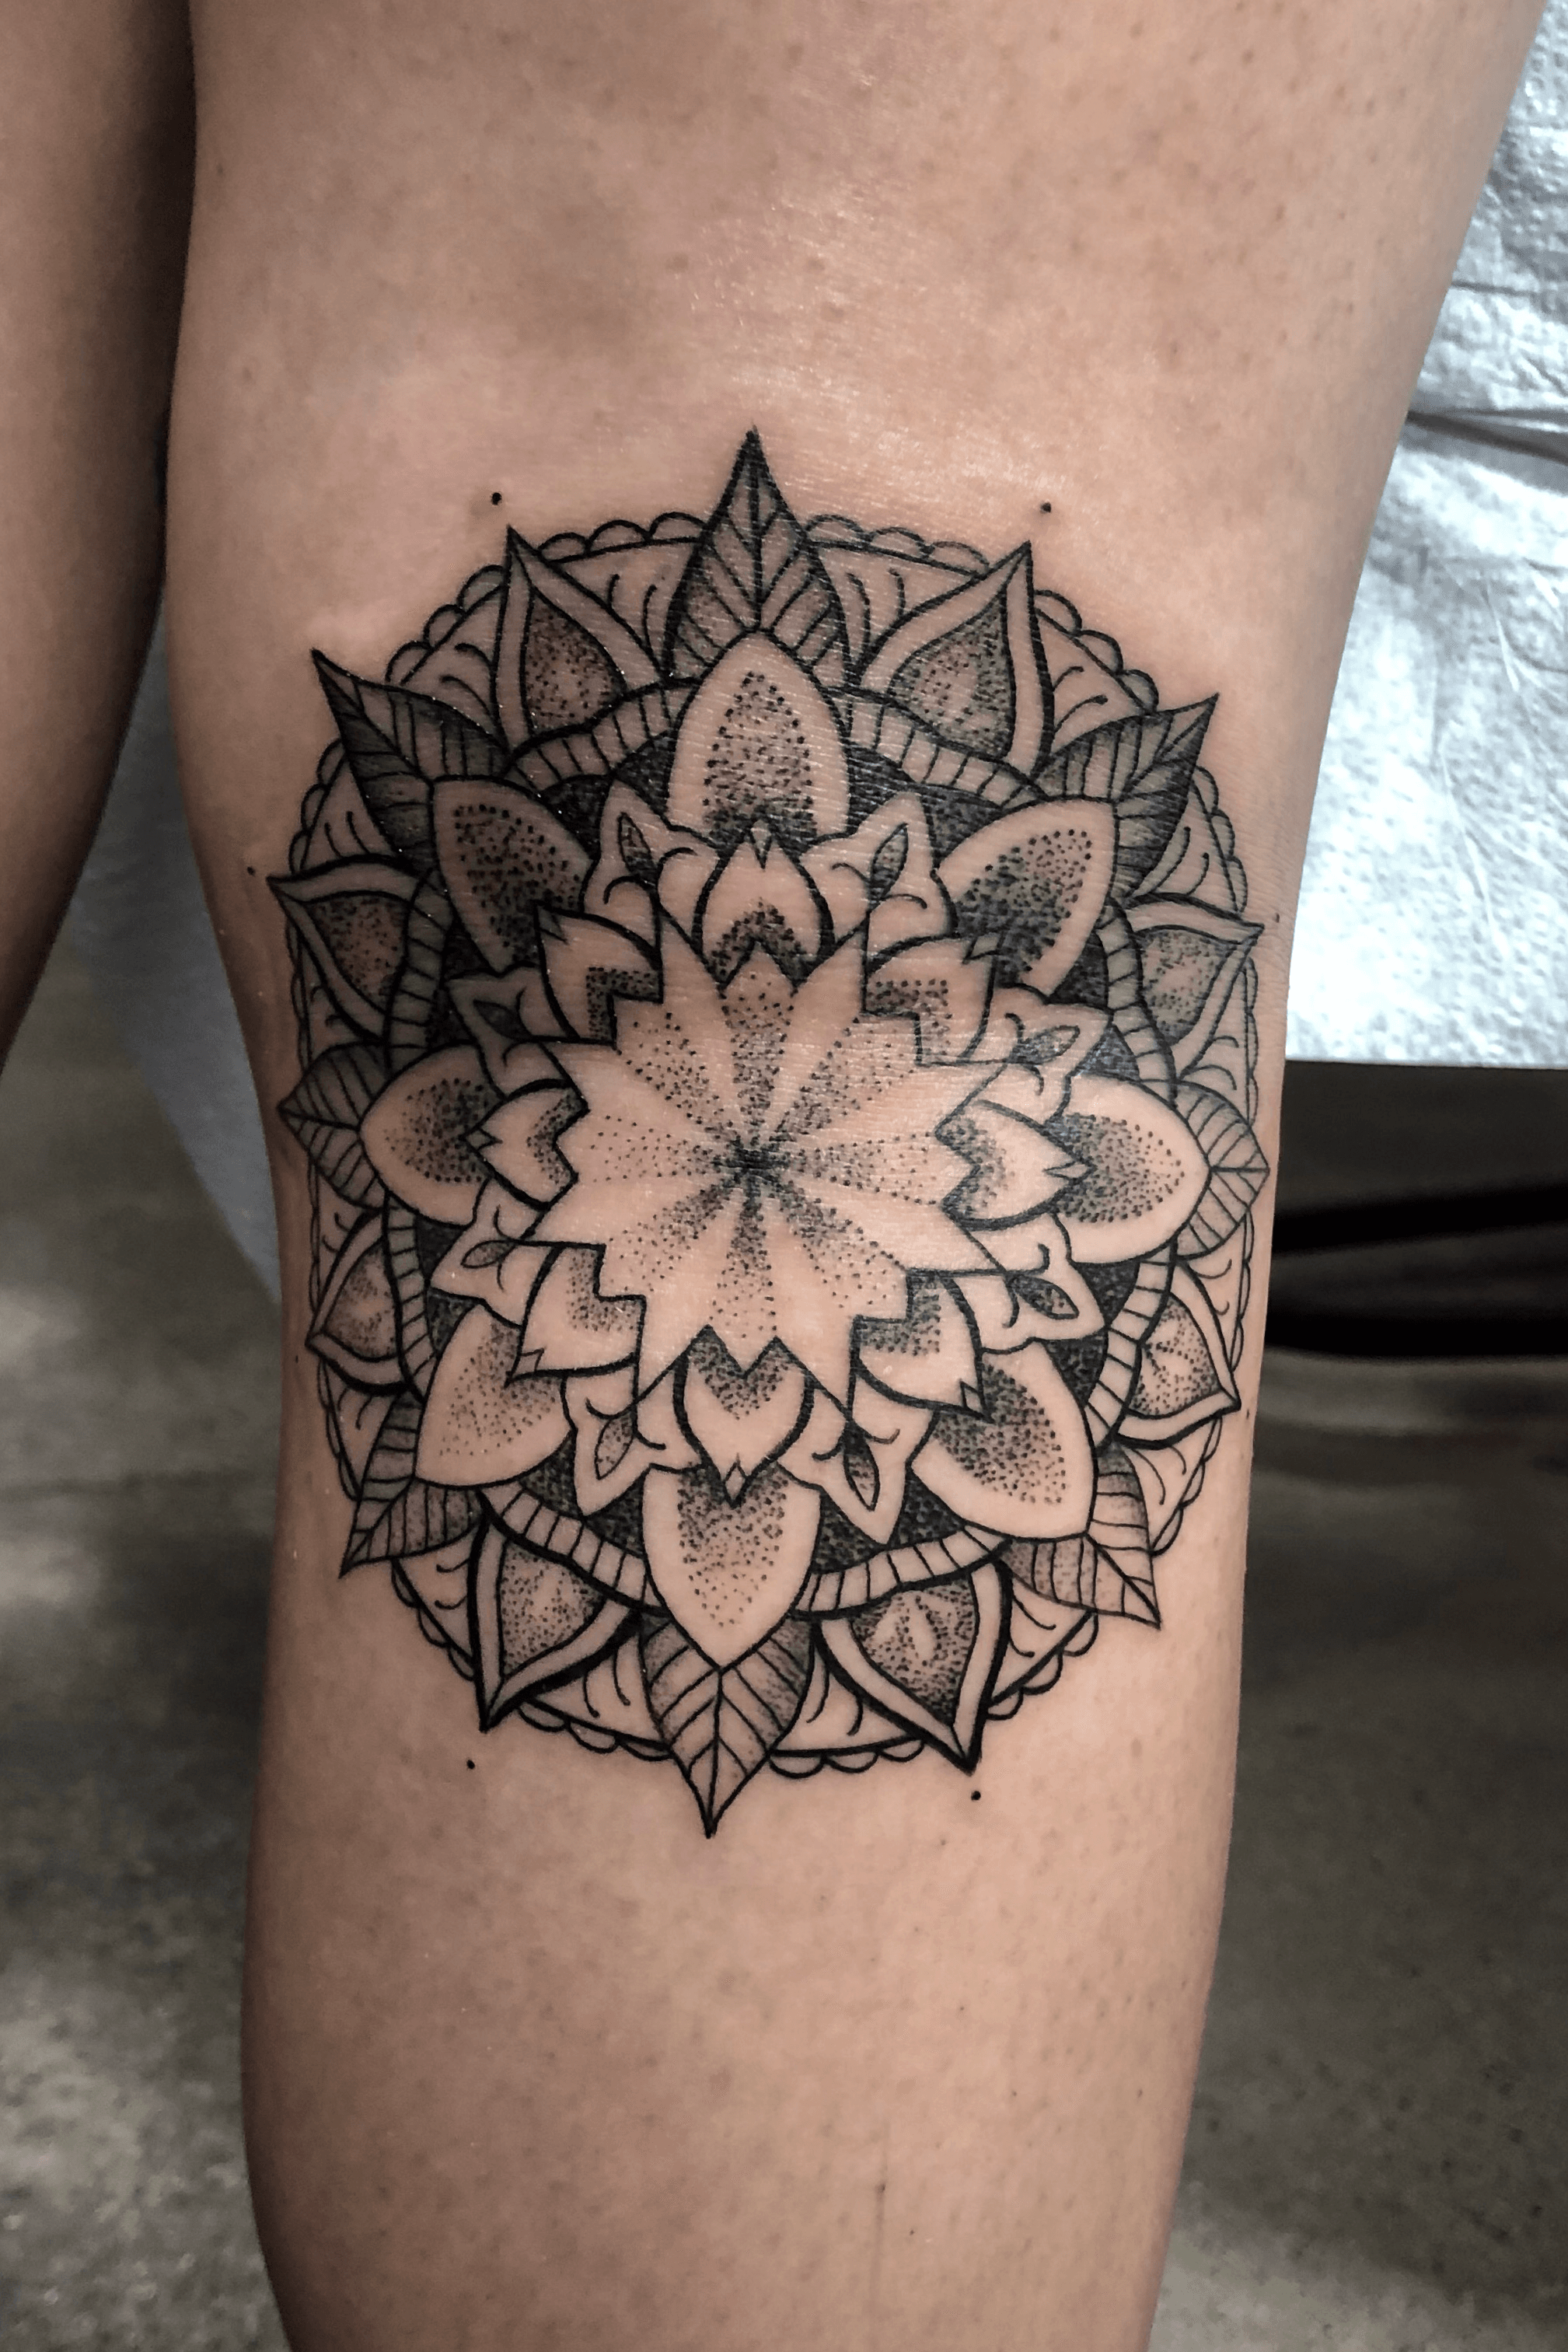 Tattoo uploaded by Justin JP Param • Back of the knee. More mandalas please! • Tattoodo